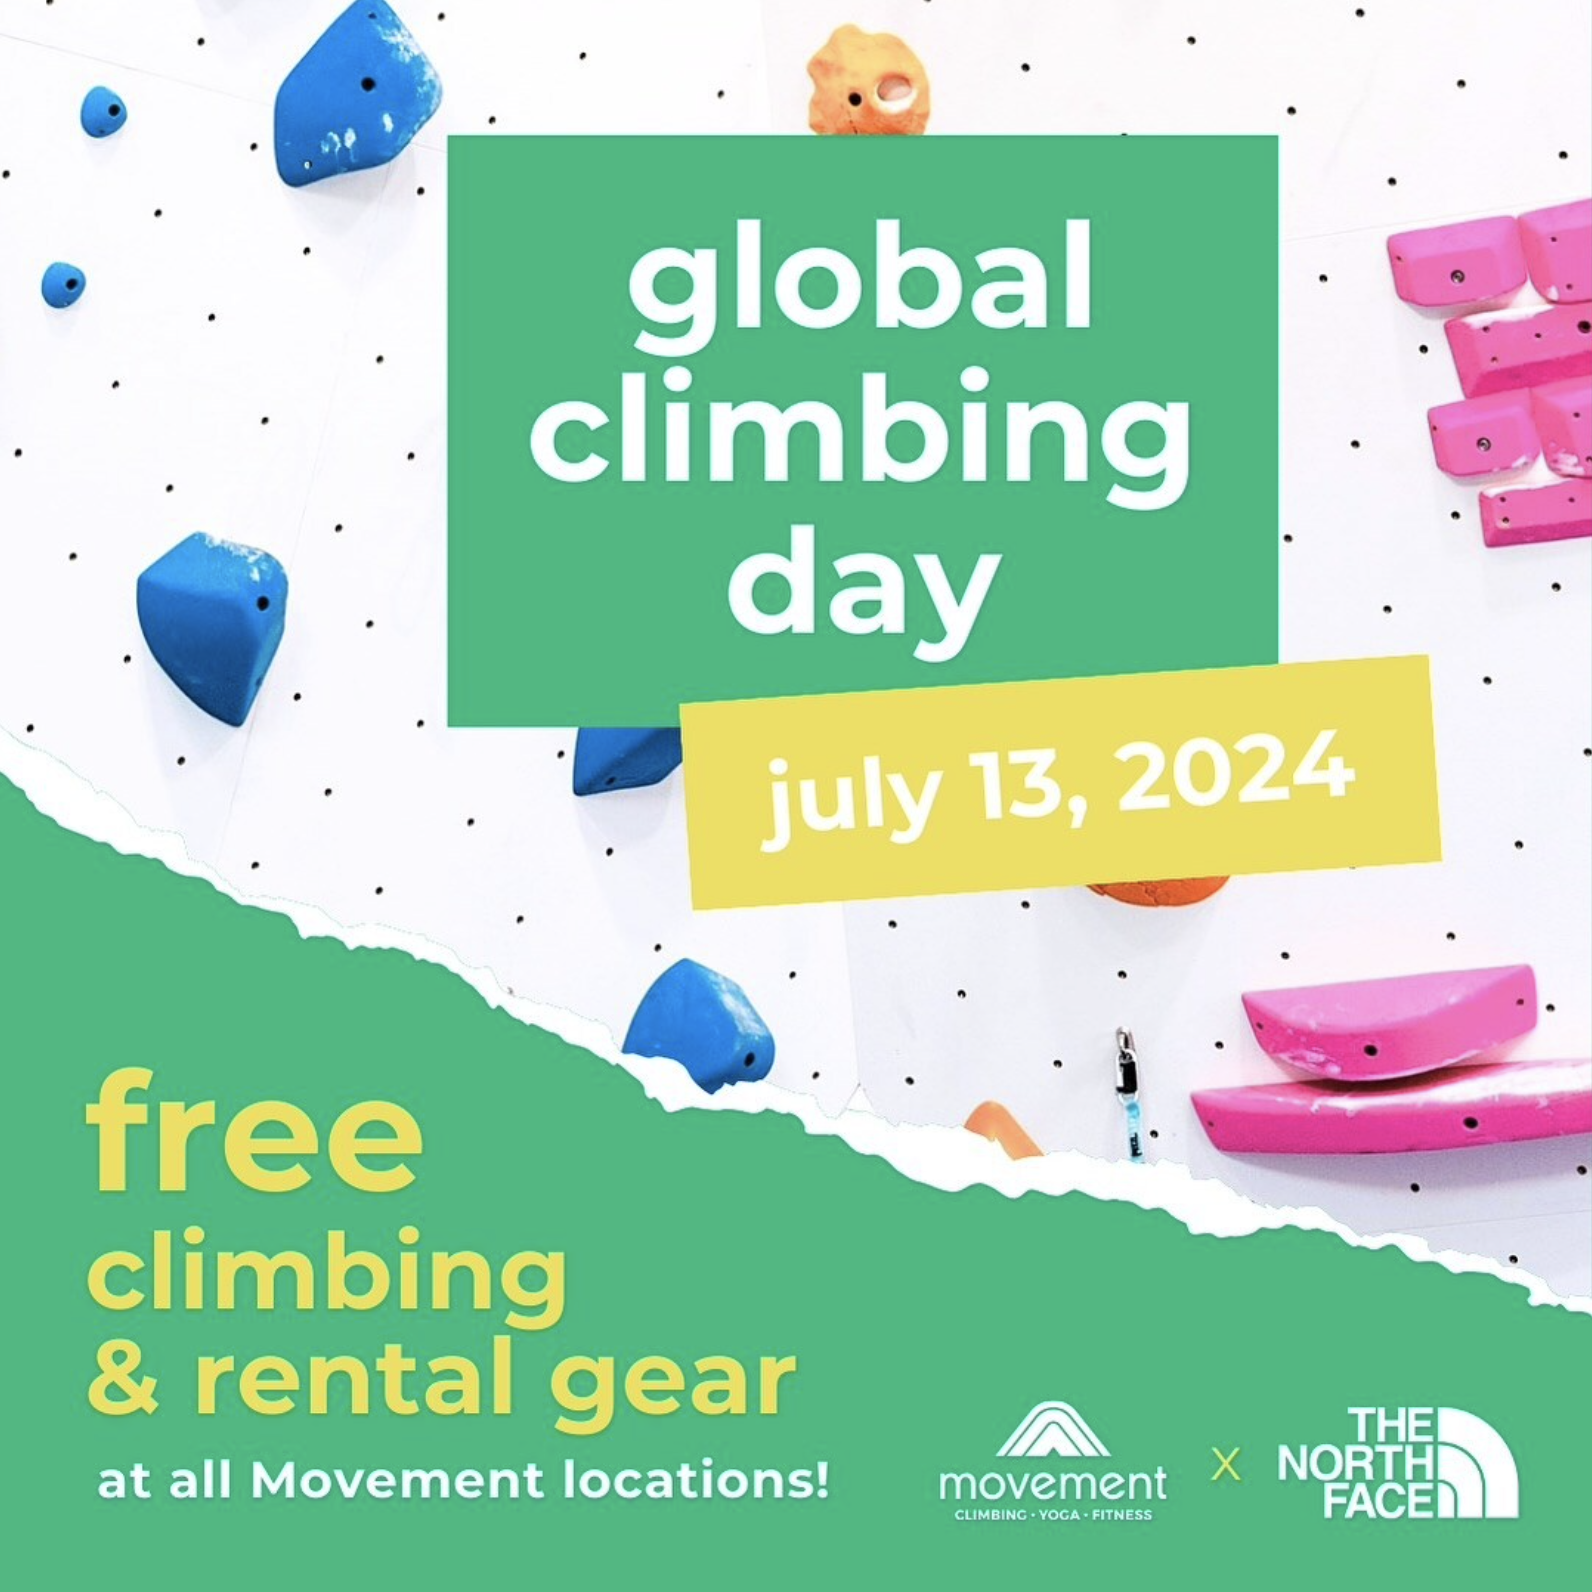 global climbing day header image